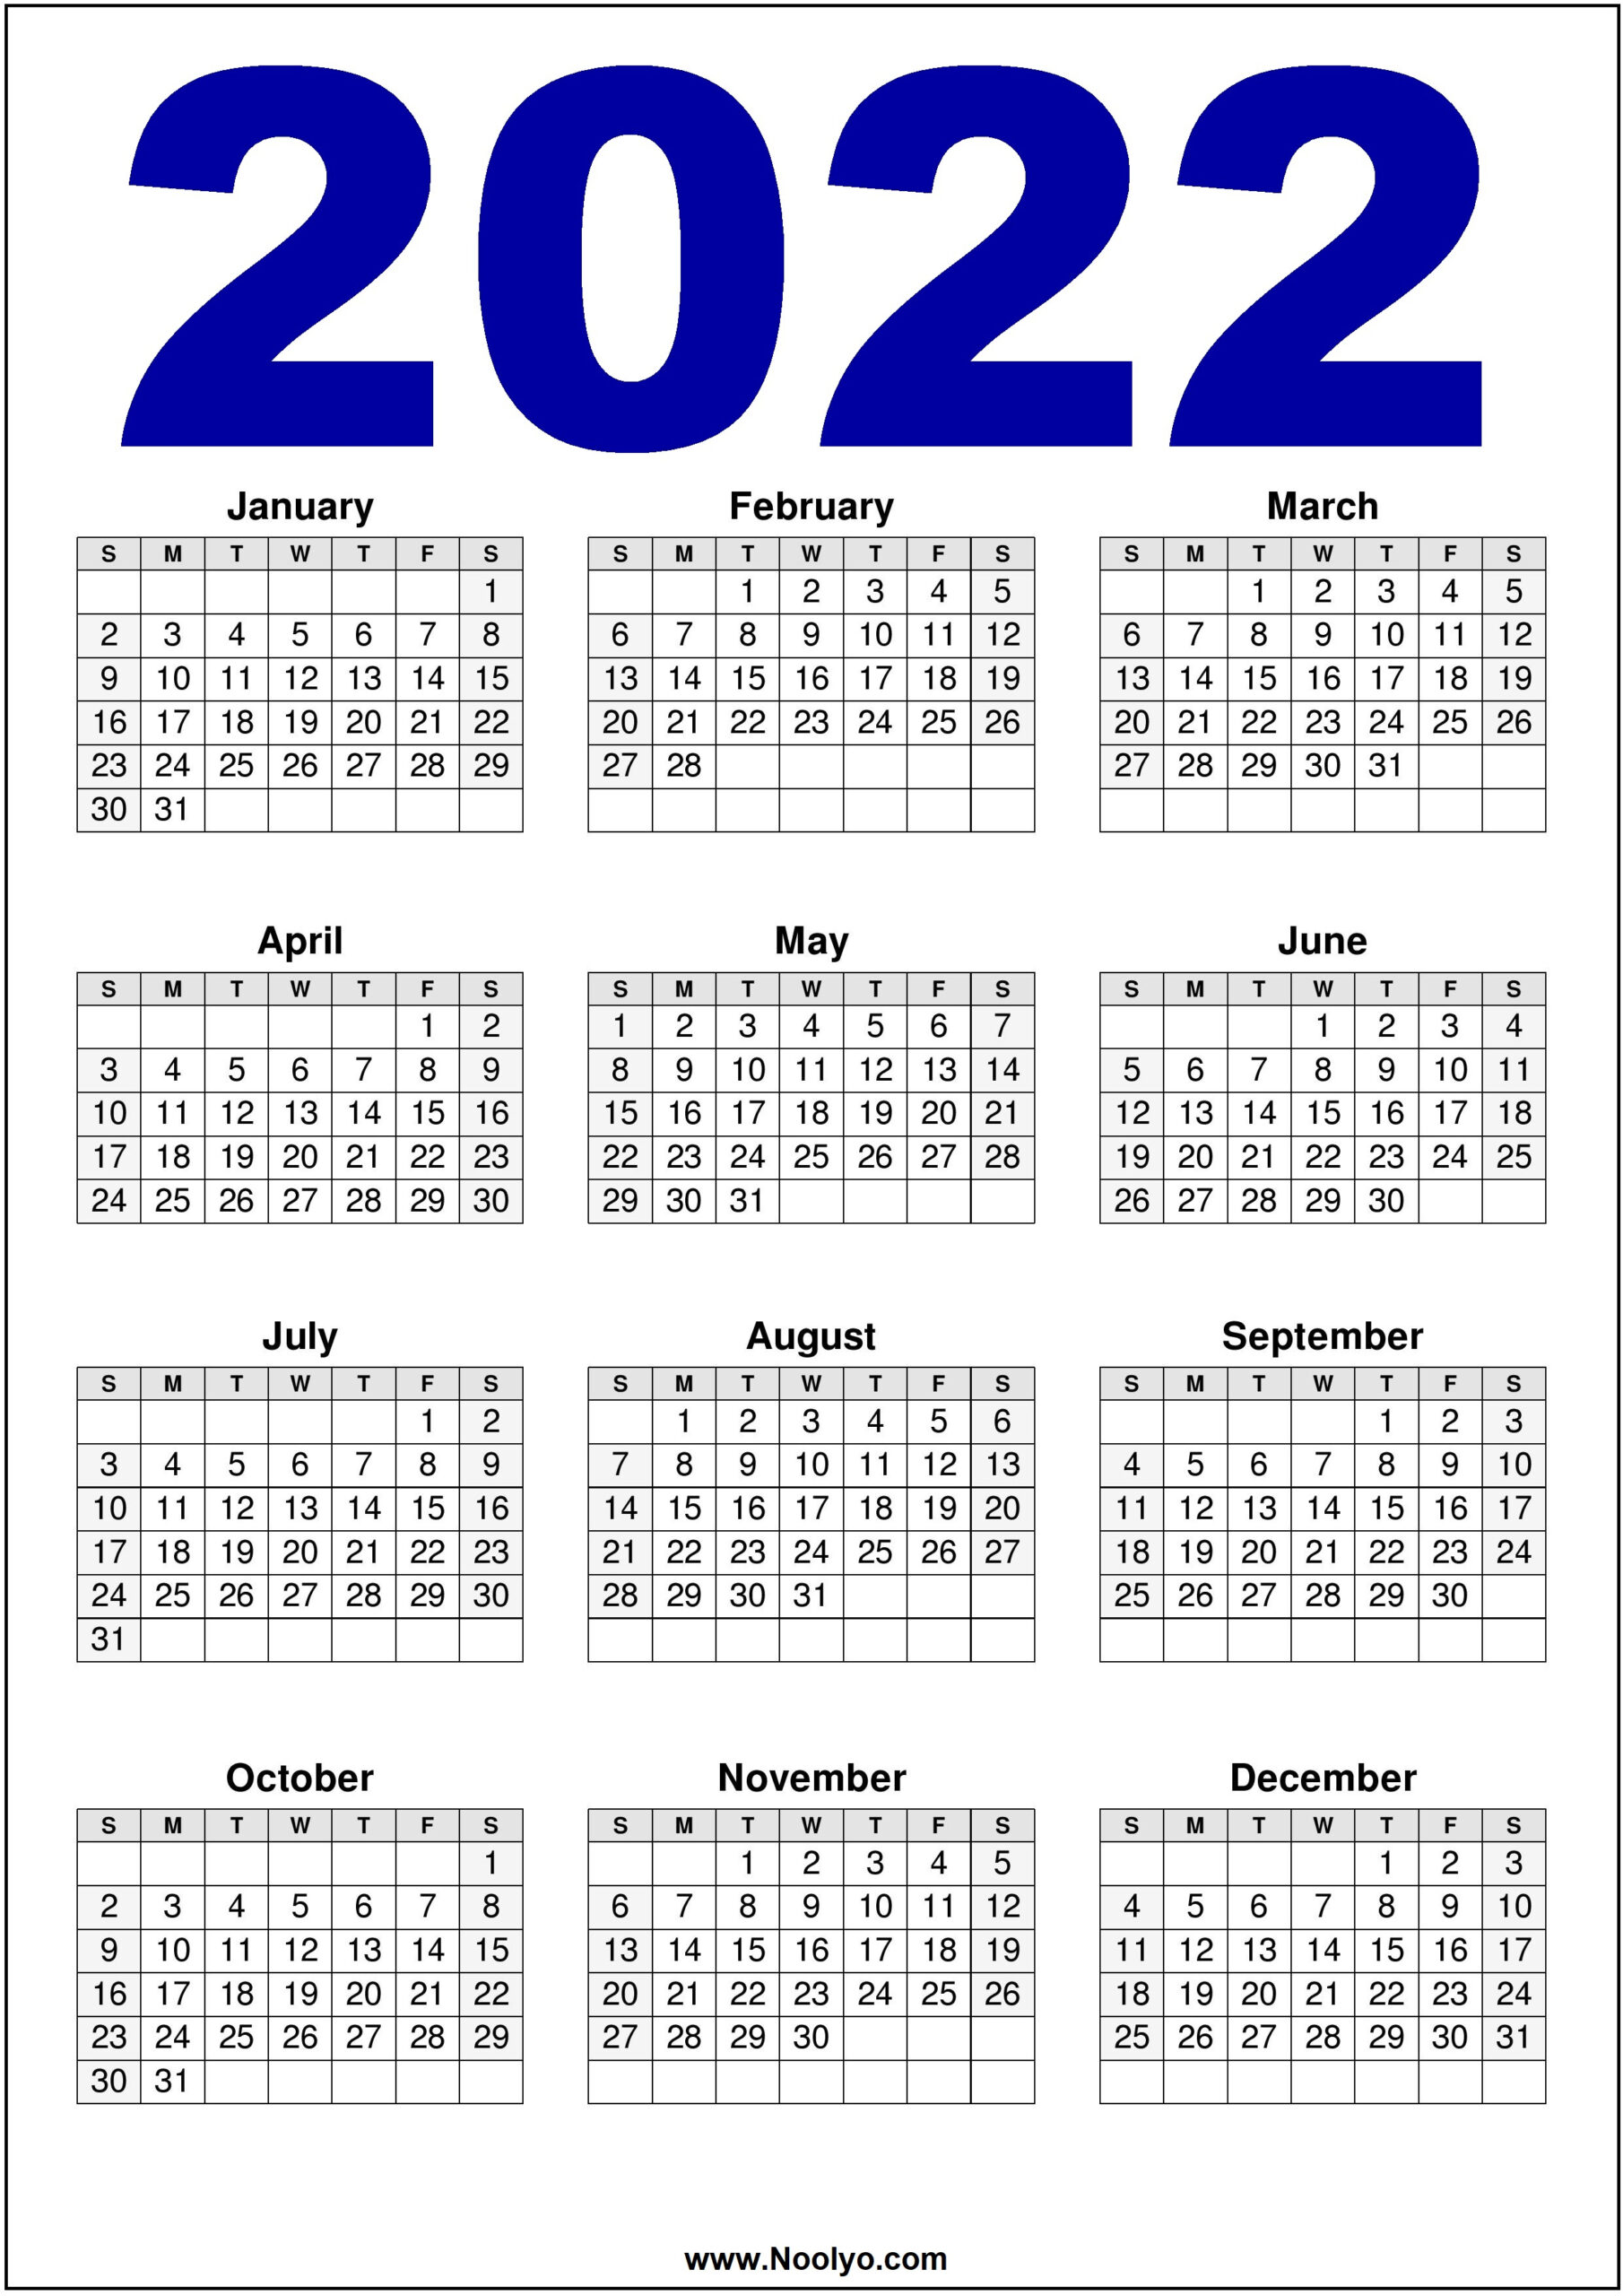 2022 Calendar Us Printable  Download Free  Noolyo with regard to Next Year Calendar 2022